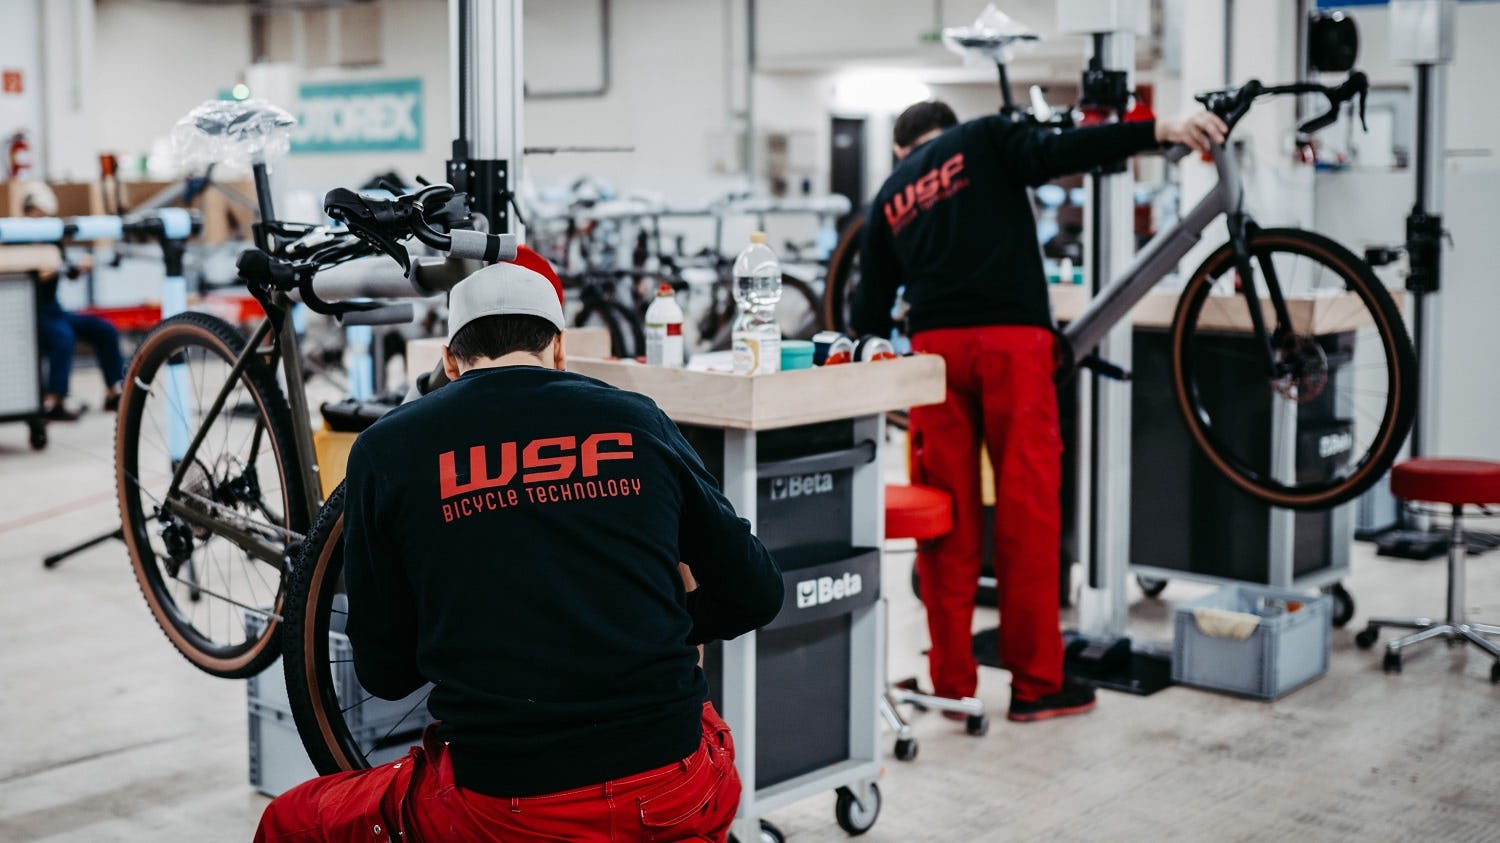 奧地利WSF Technology宣告破產